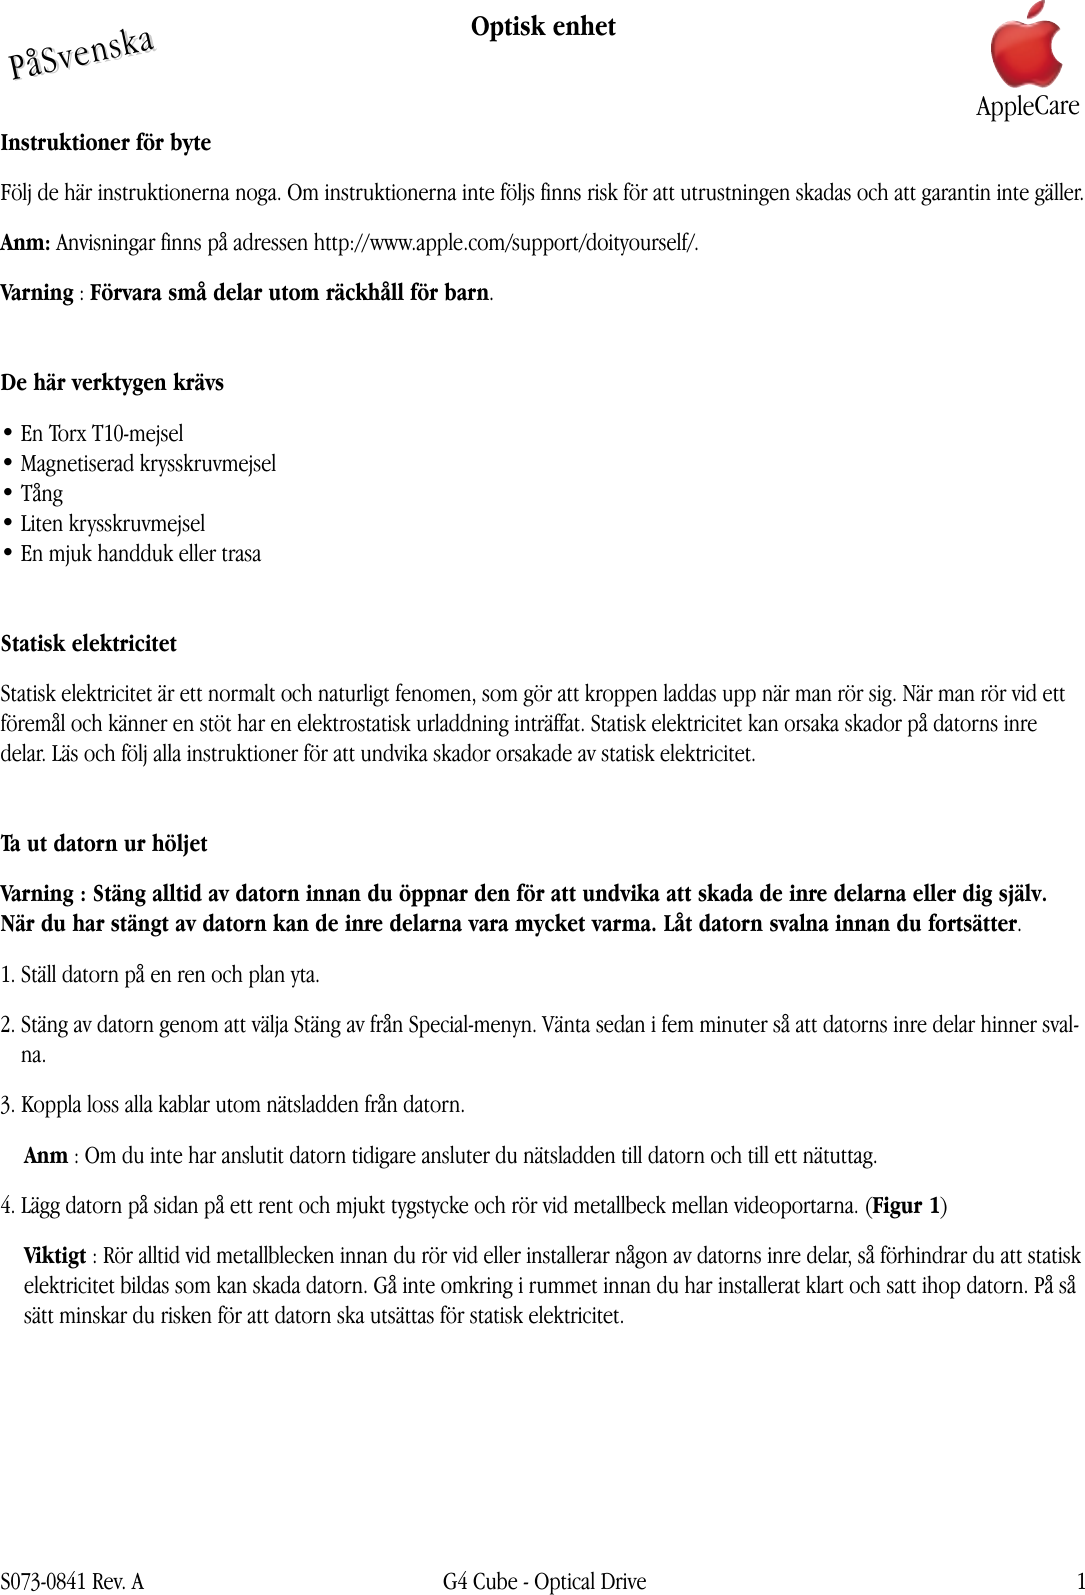 Page 1 of 12 - Apple Power Mac G4 (Cube) Optical Drive User Manual - Optisk Enhet Instruktioner För Byte 073-0841-a